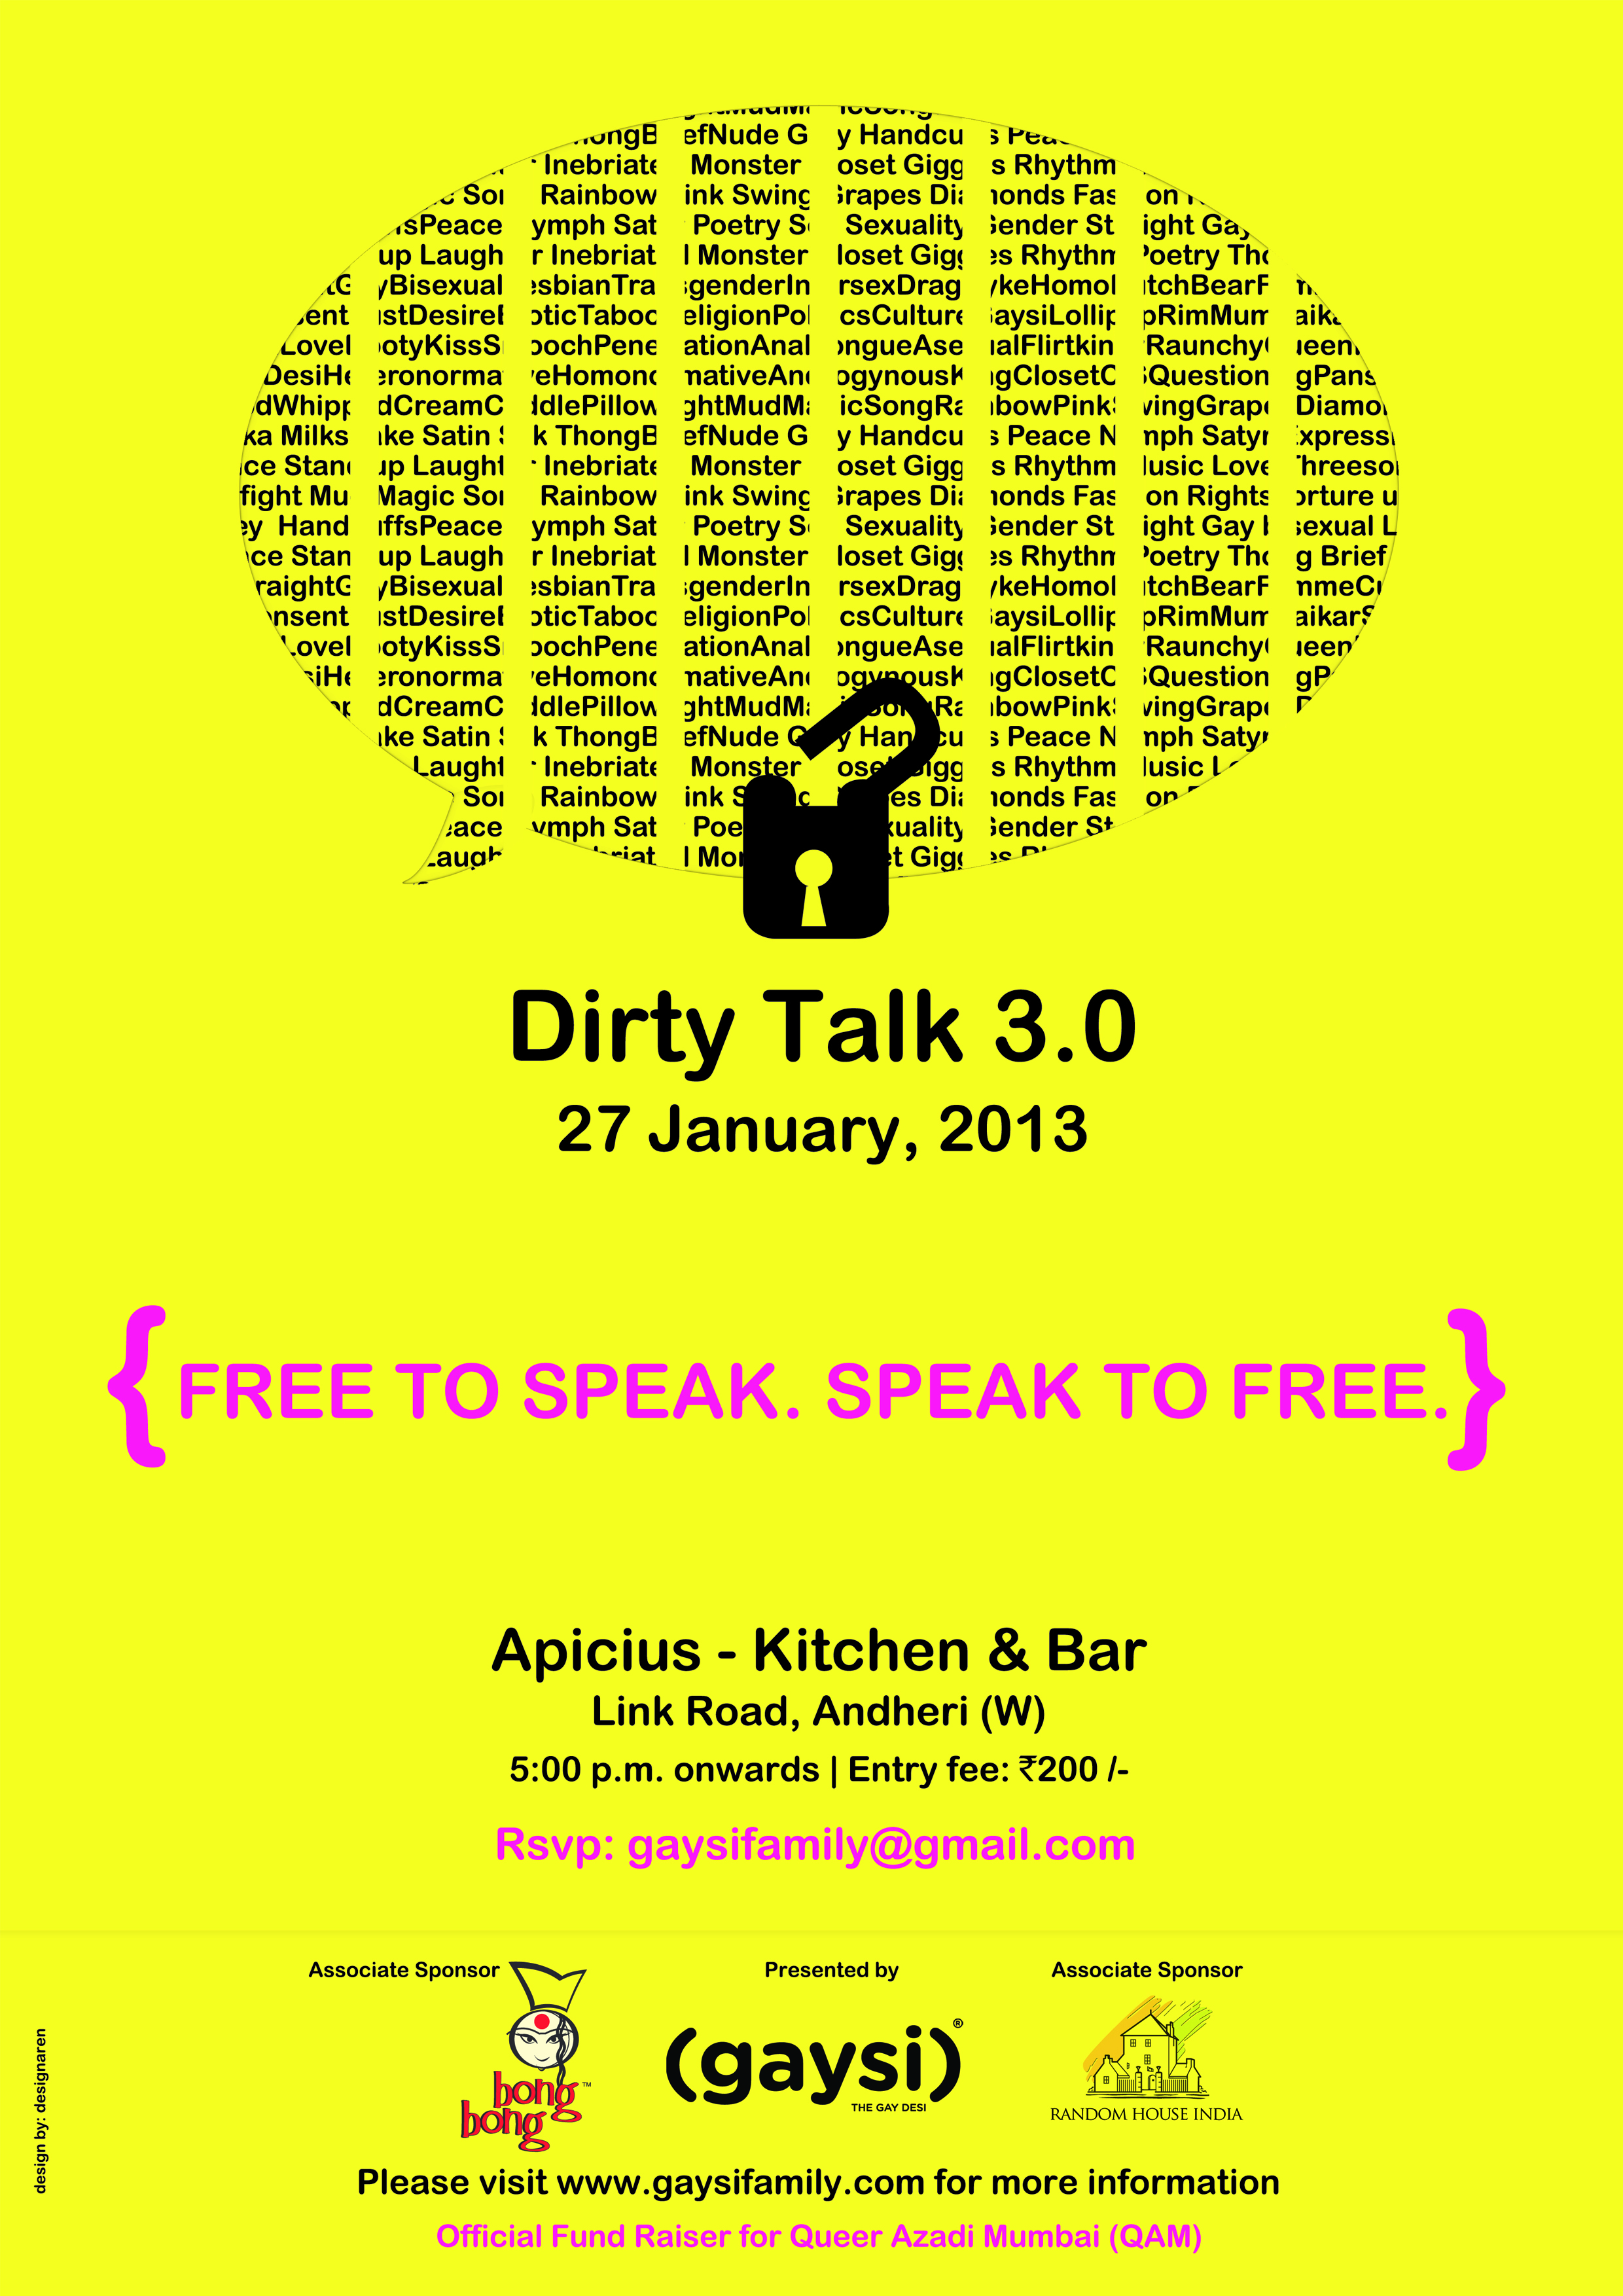 Dirty Talk 3.0 (27th January 2013) : Fundraiser for QAM 2013